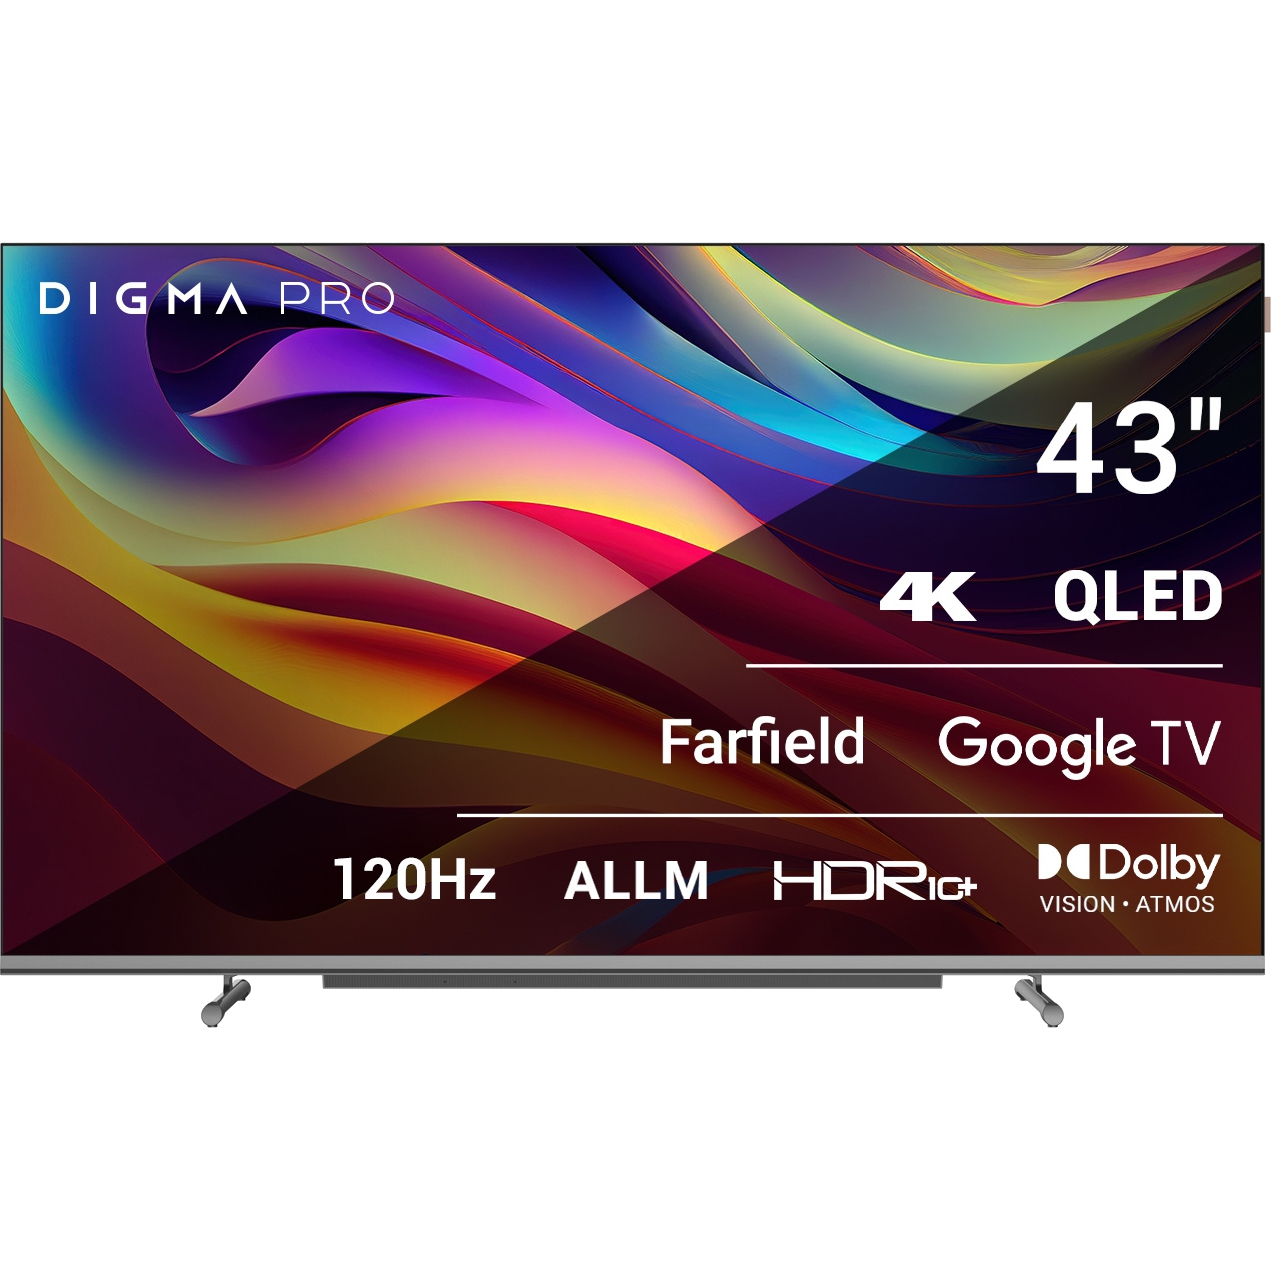 Телевизор Digma Pro 43 43L цена и фото